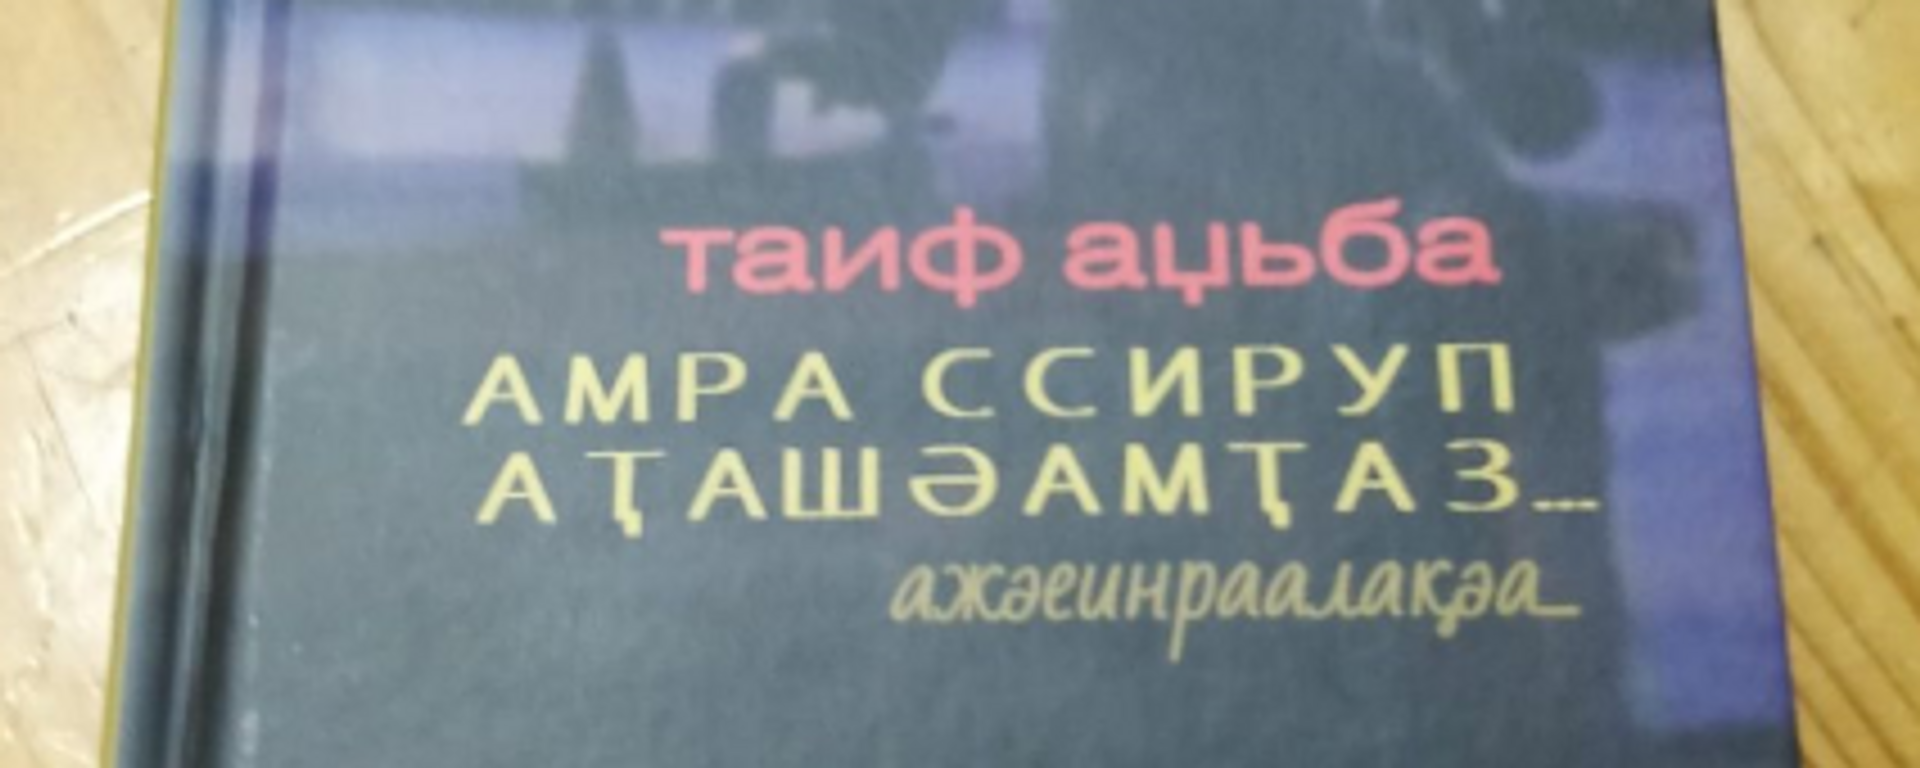 книга Таифа Аджба - Sputnik Аҧсны, 1920, 24.04.2022